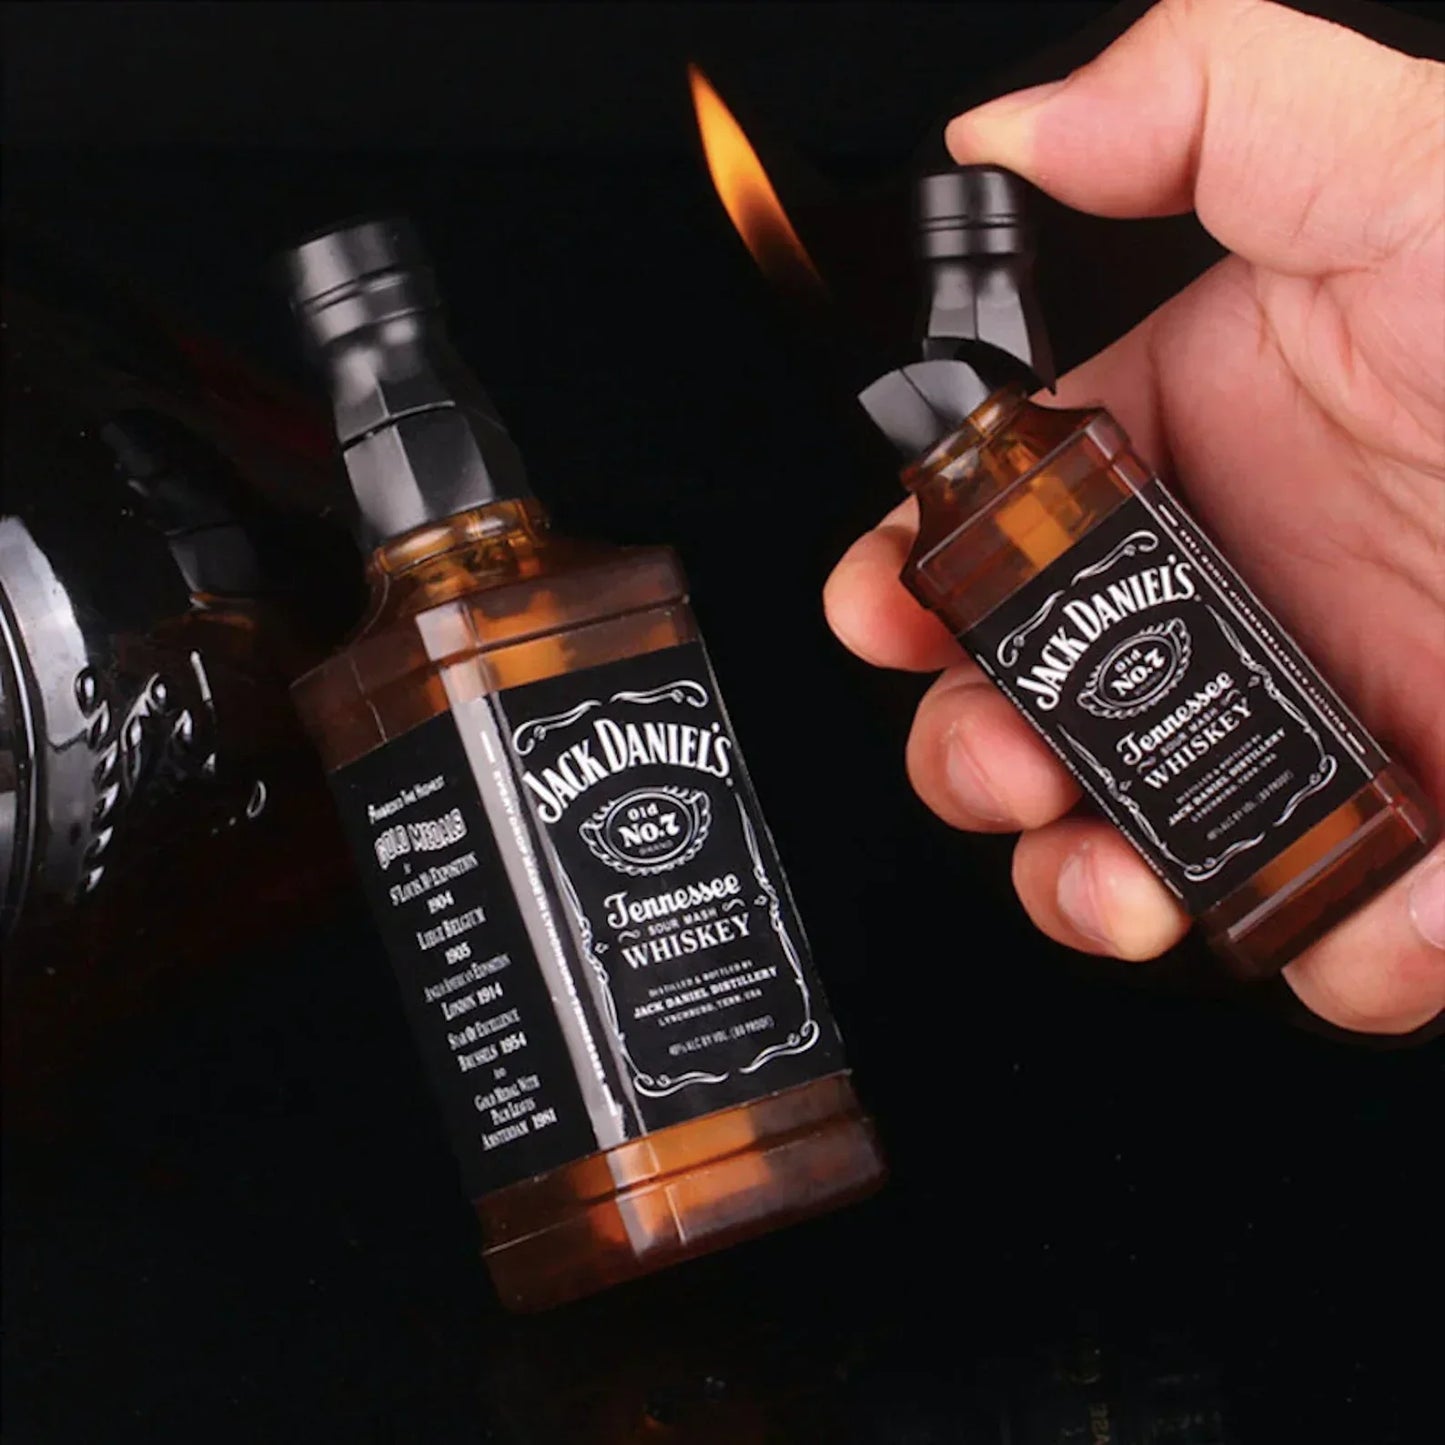 Distinctive Jack Daniels lighter in focus